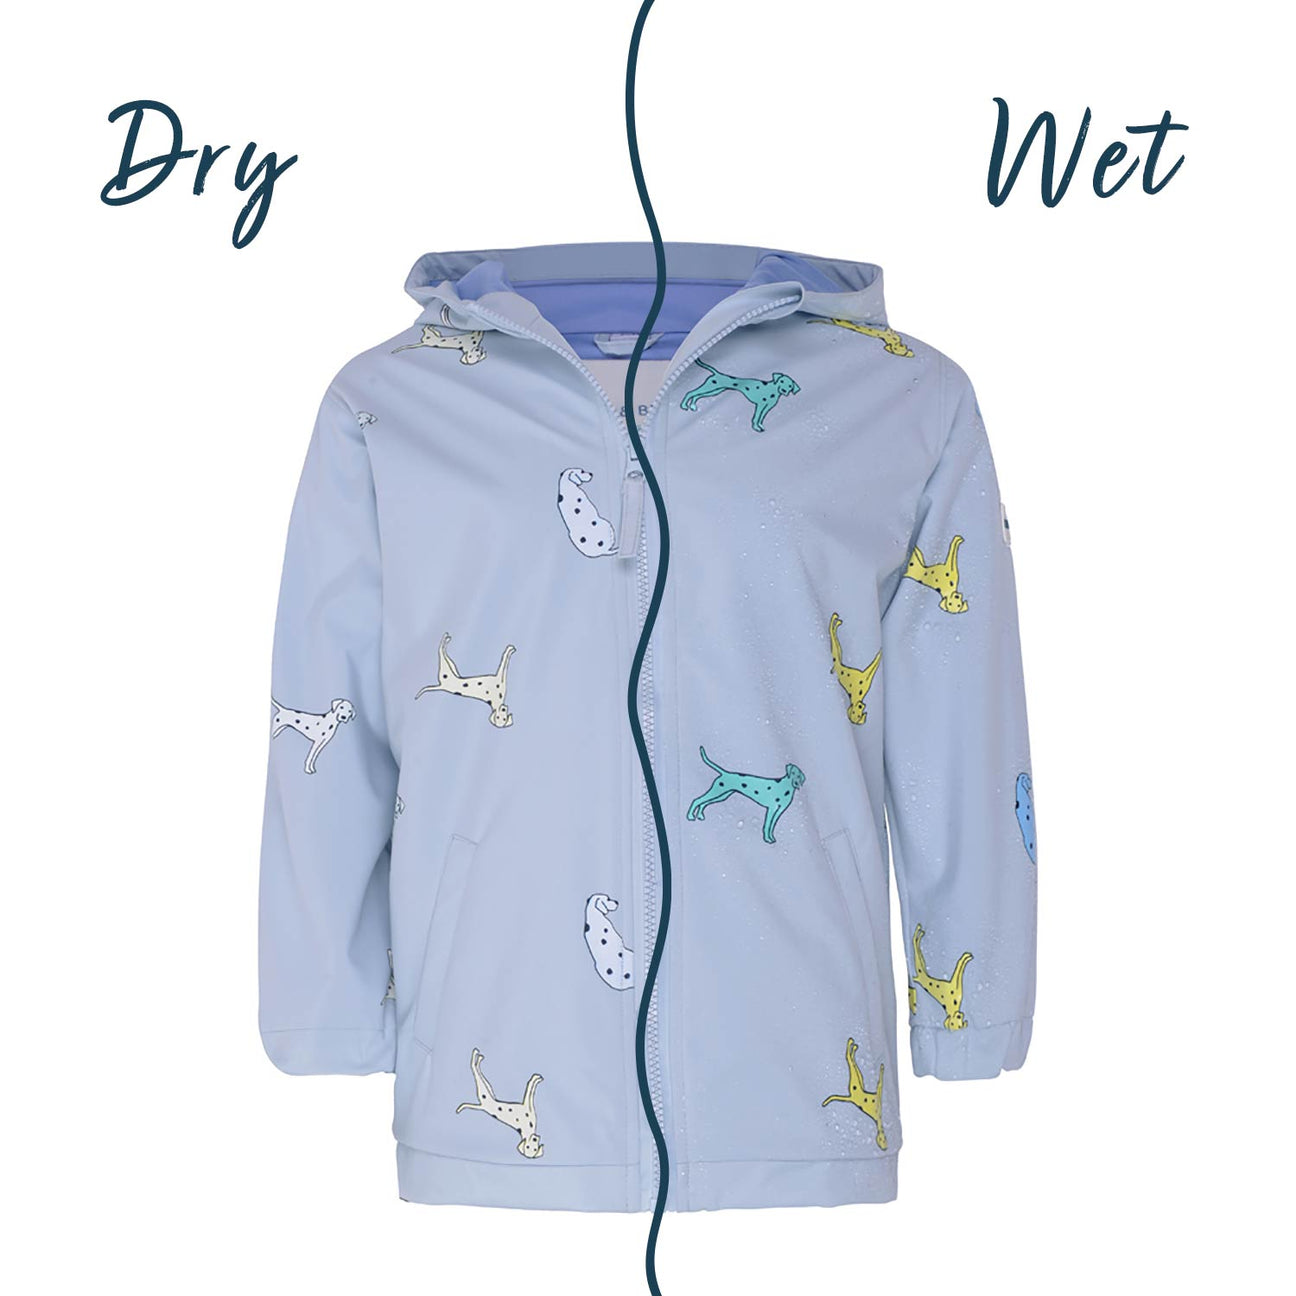 Holly & Beau Packaway Color-Changing Raincoat | Dalmatian